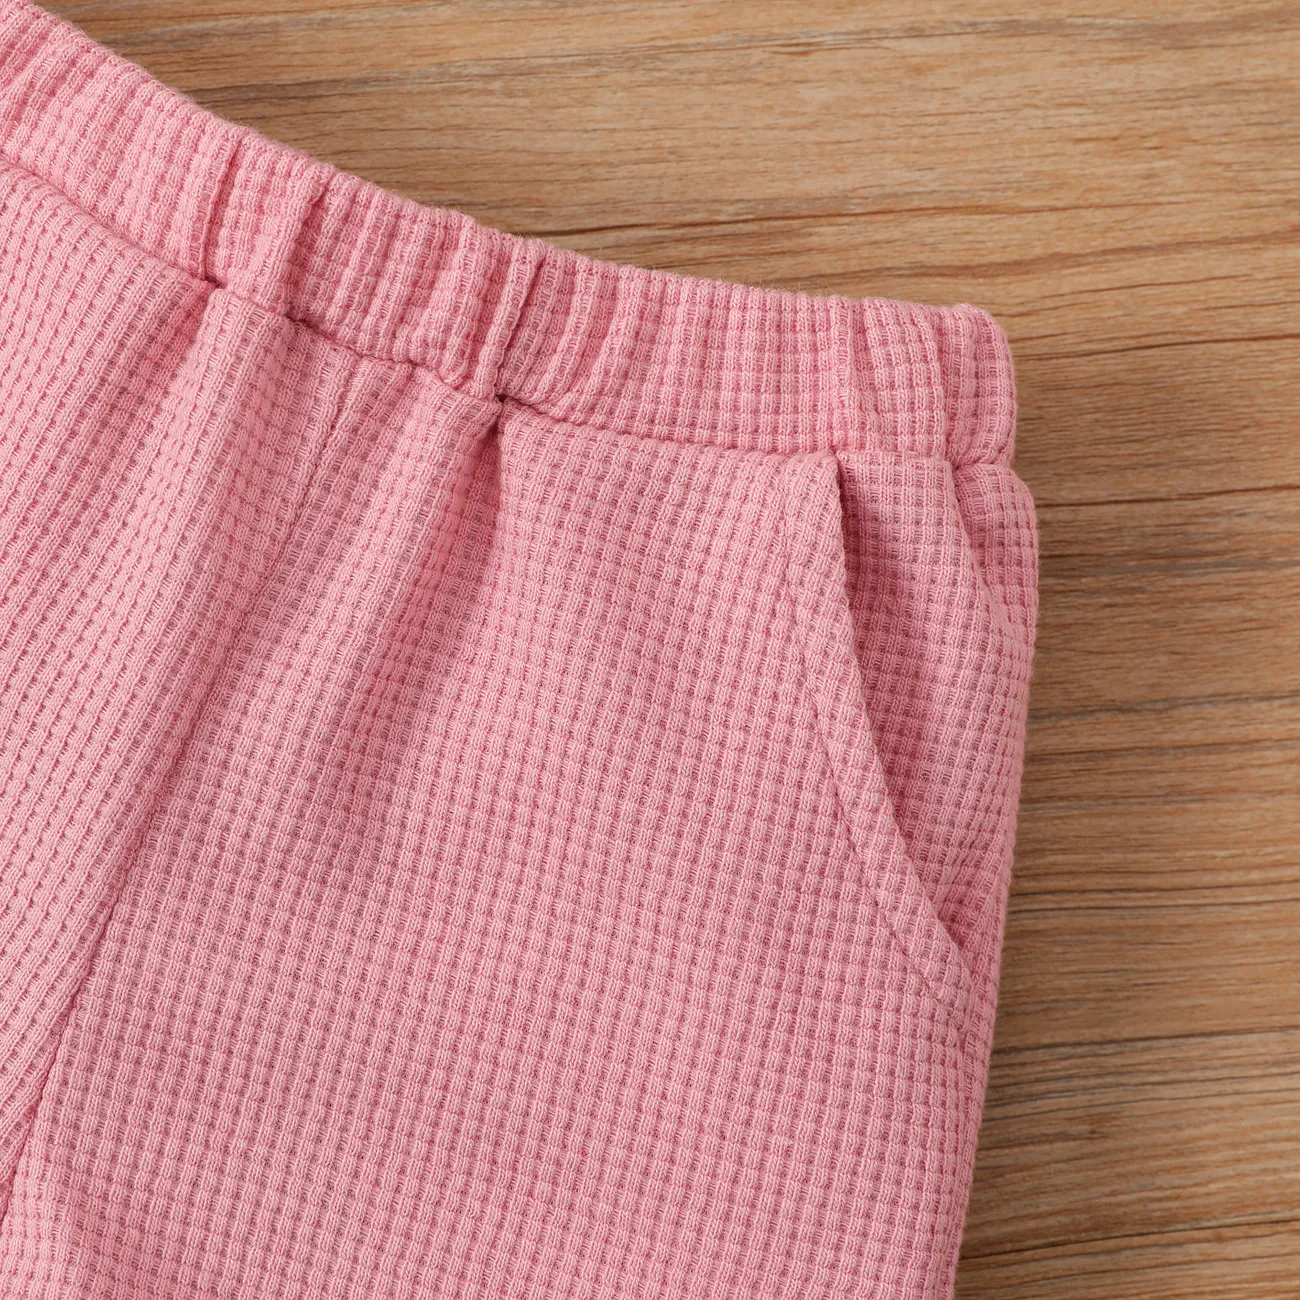 Baby/Toddler Boy/Girl 2pcs Bear Embroidery Tee and Shorts Set Pink big image 1